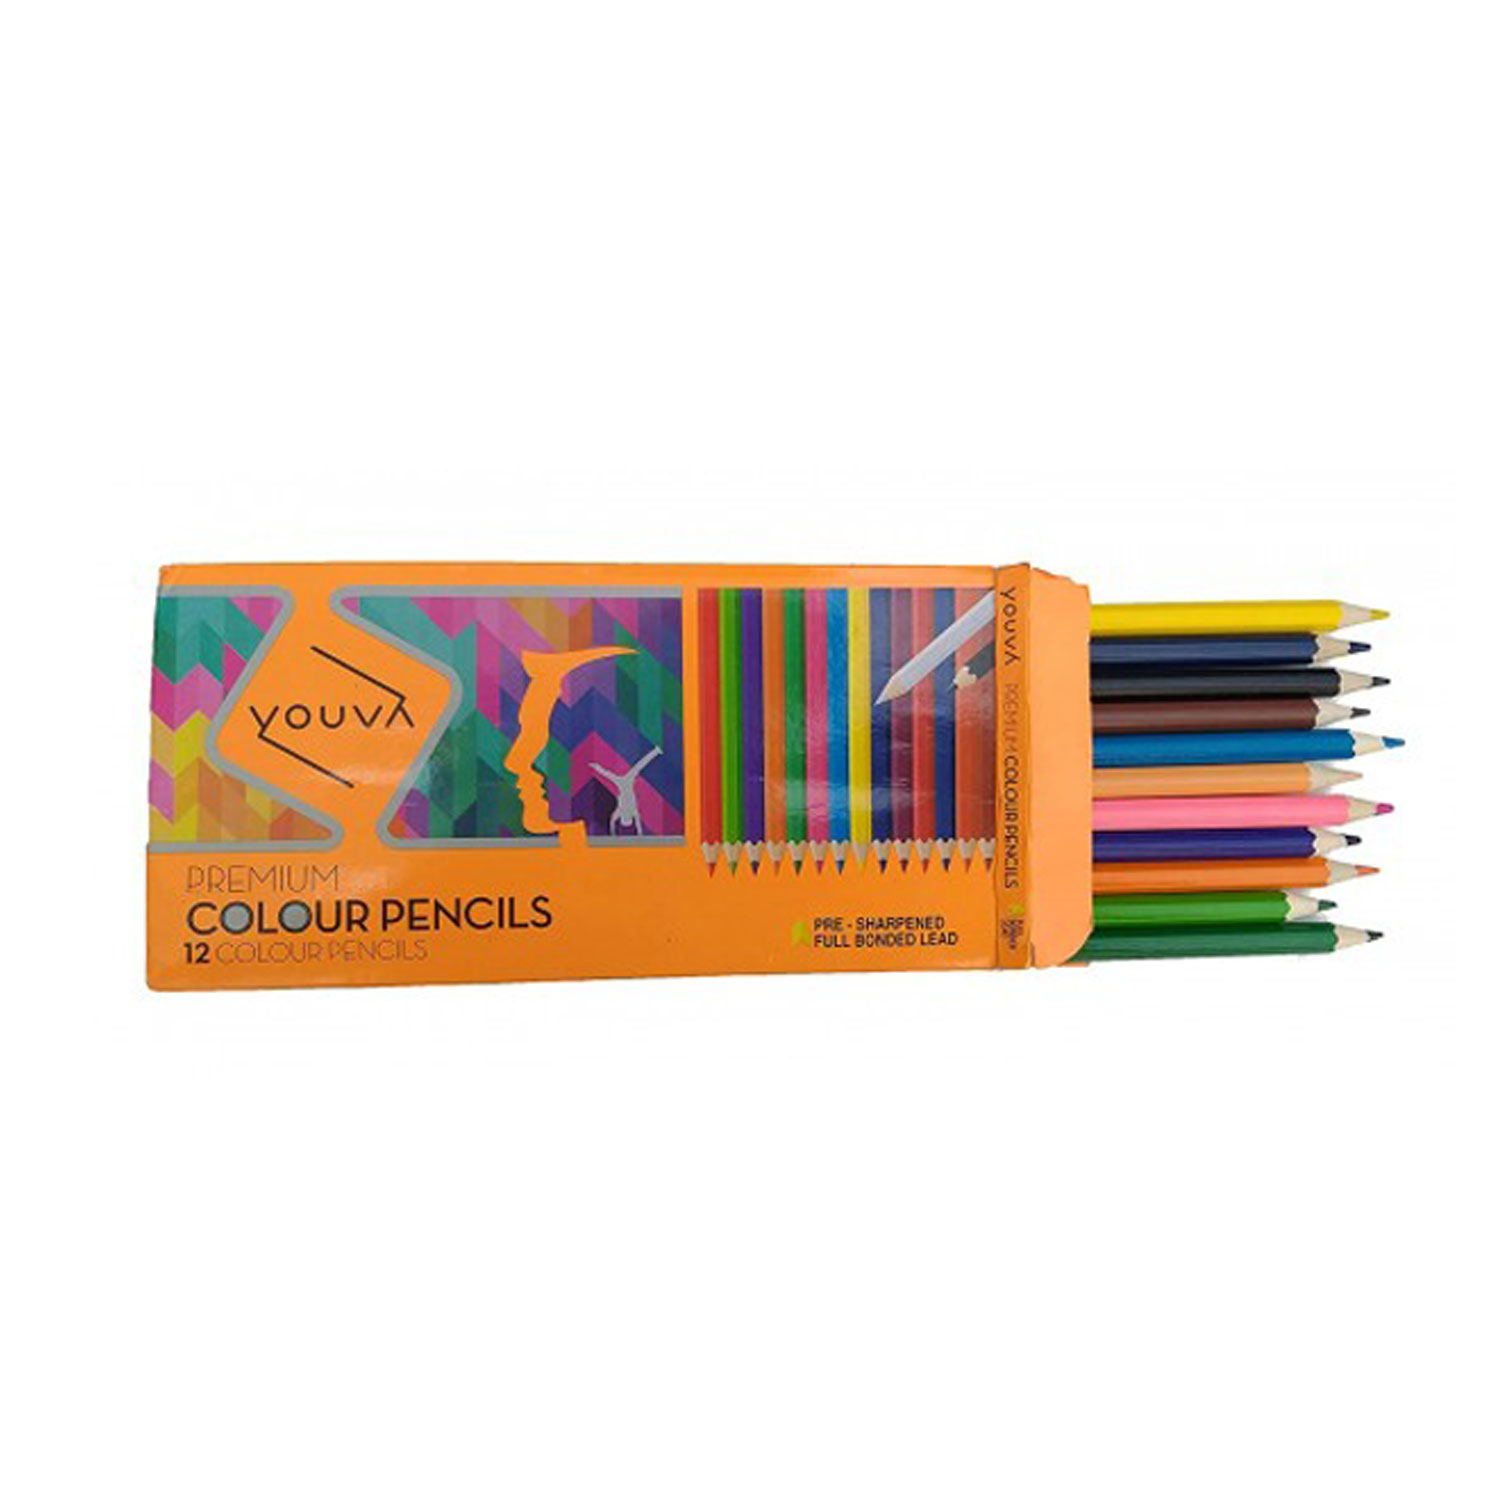   Premium 12 Colour Pencil |VT35007 |Youva | Pack of 12